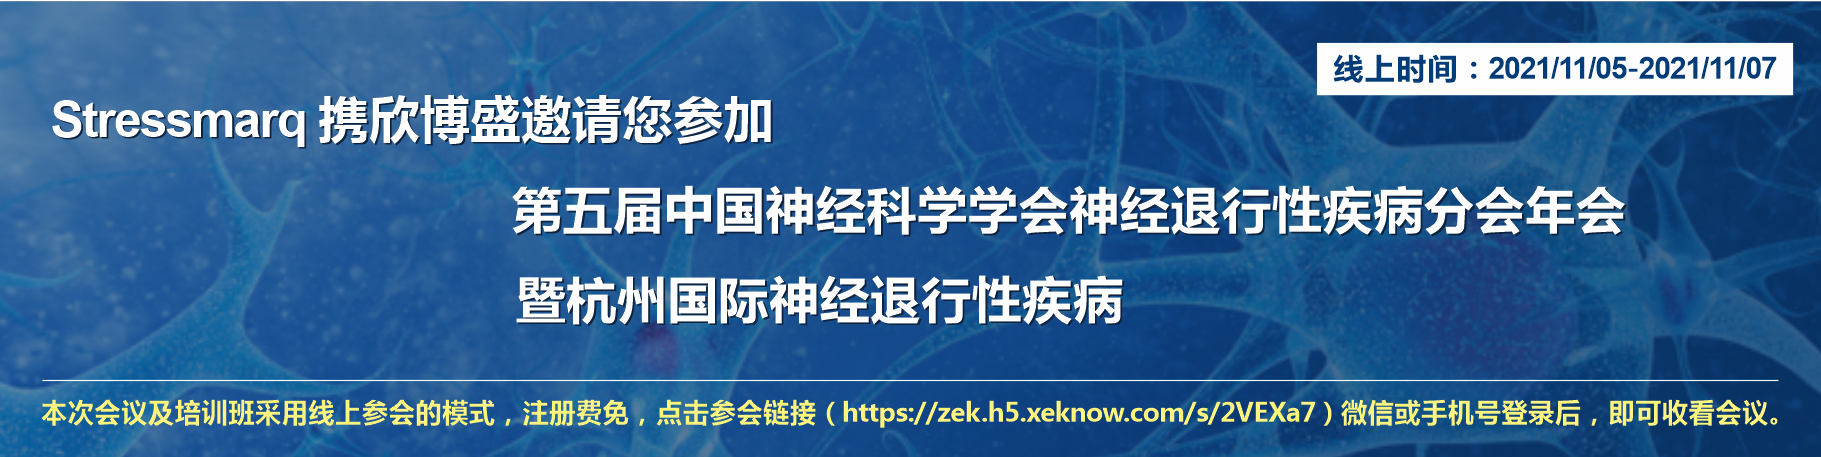 Stressmarq携3868la银河总站邀请您参加第五届中国神经科学学会神经退行性疾病分会年会暨杭州国际神经退行性疾病